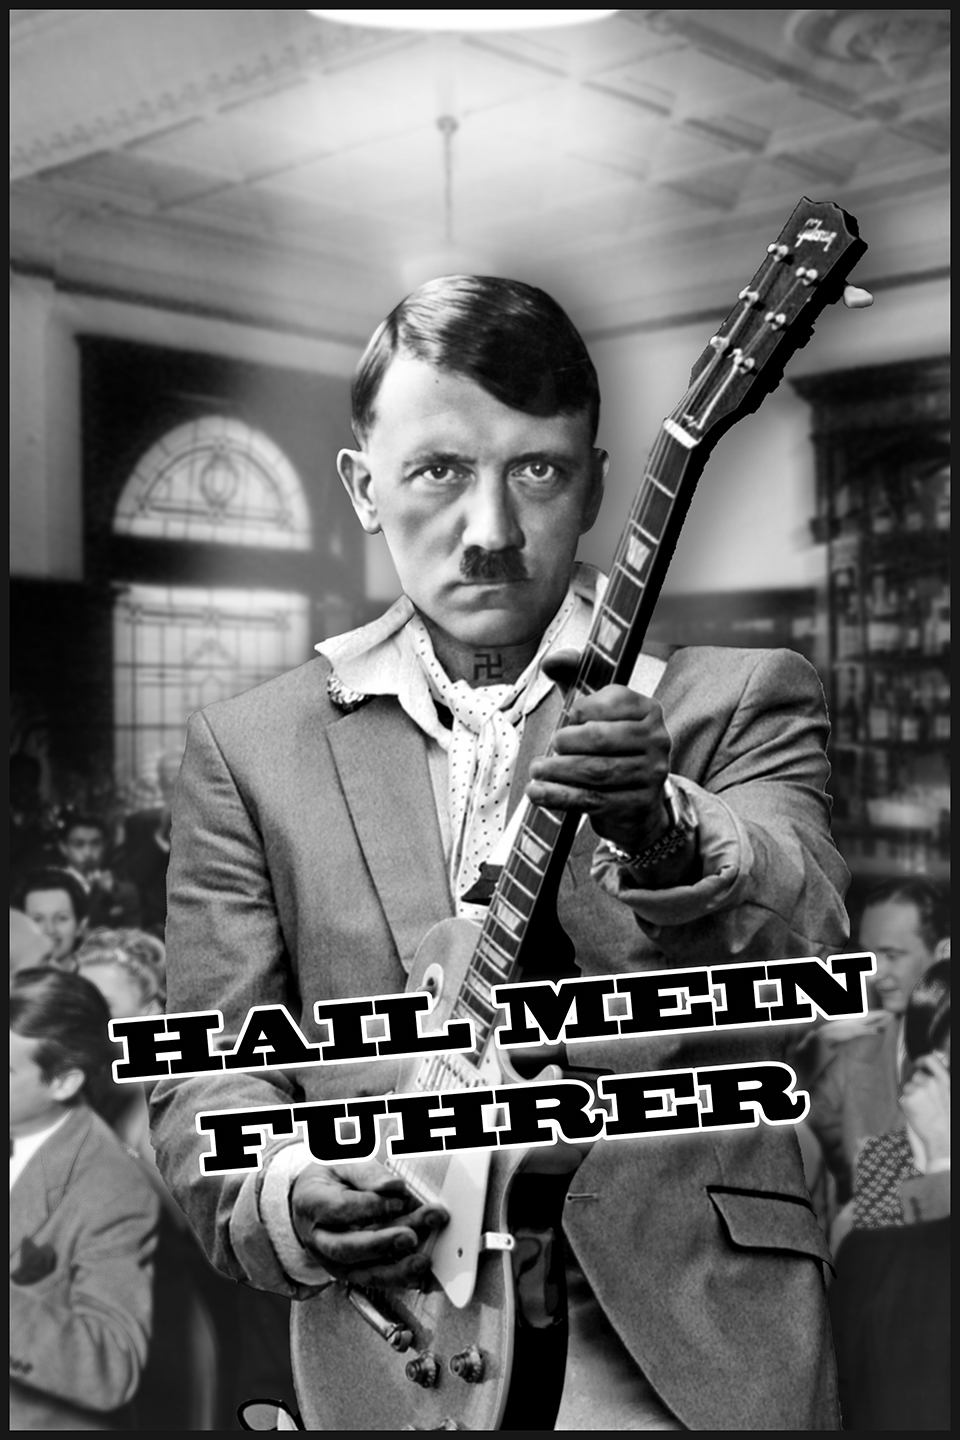 Hitler bush putin dictator comedy  political satire